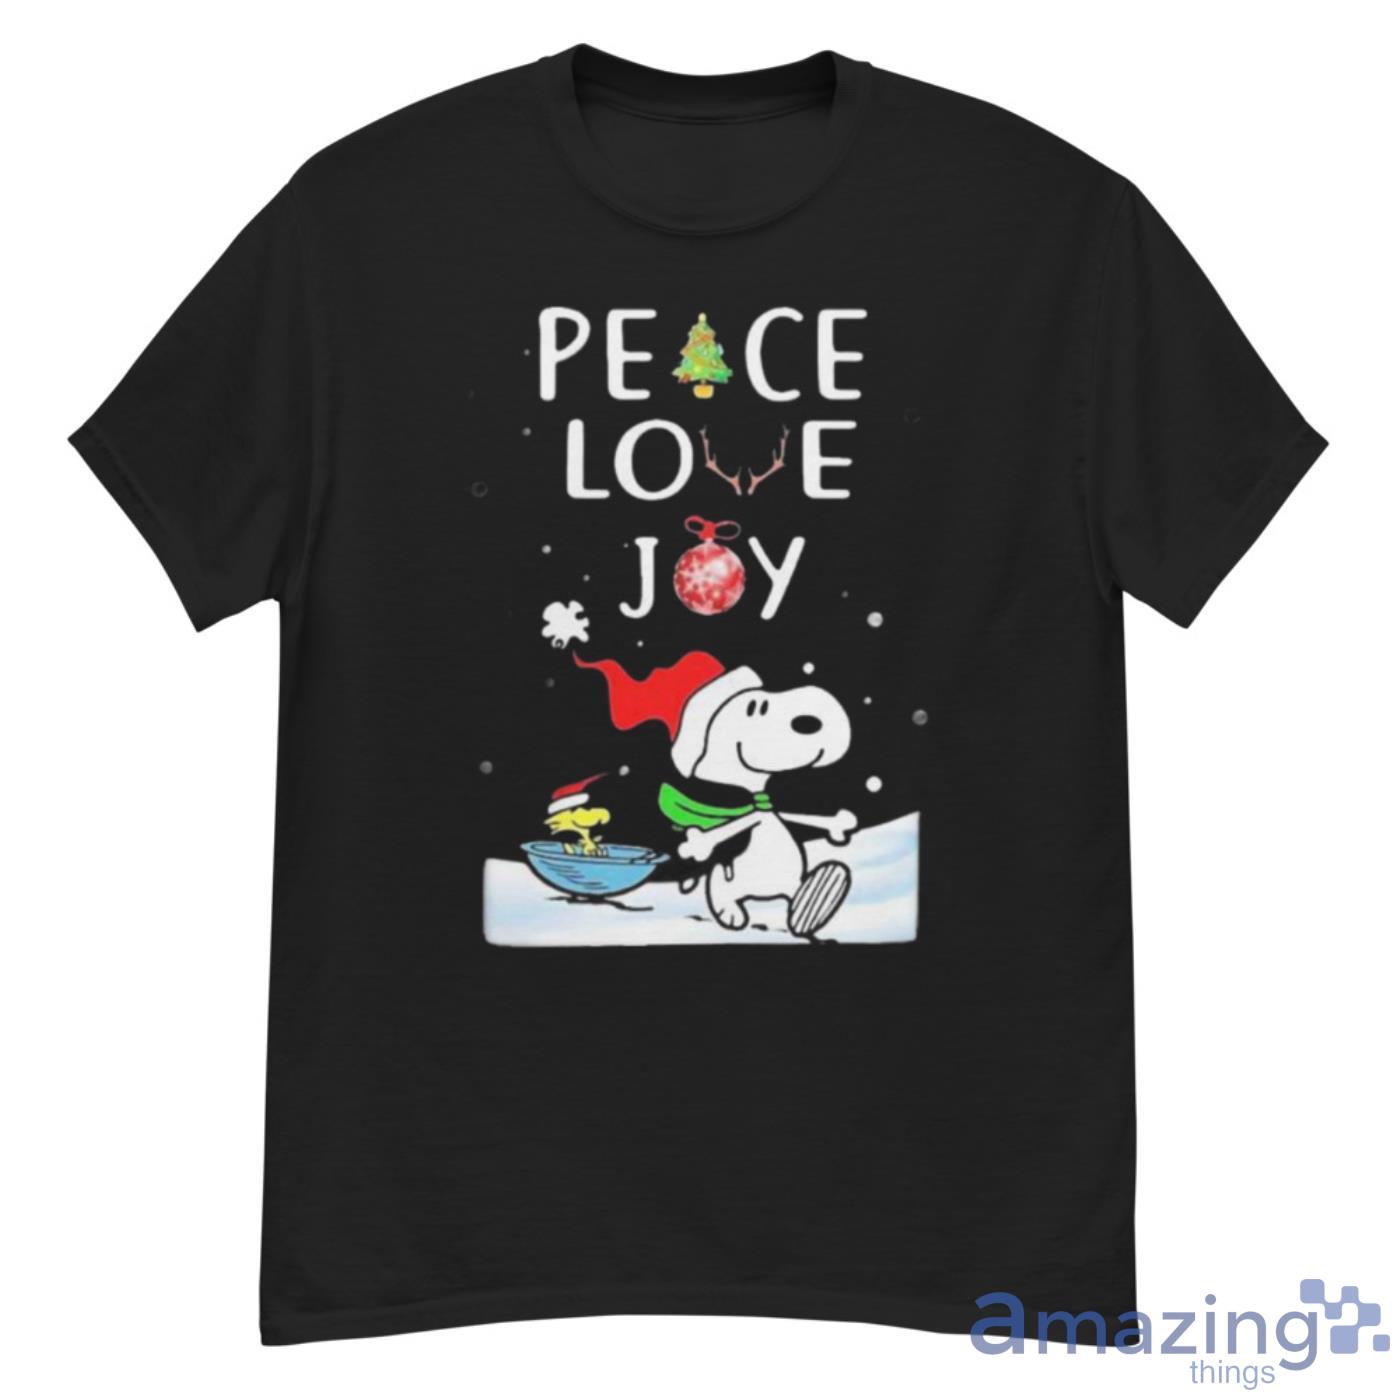 Funny Merry Christmas Peanuts Snoopy Peace Love Joy Shirt - G500 Men’s Classic T-Shirt